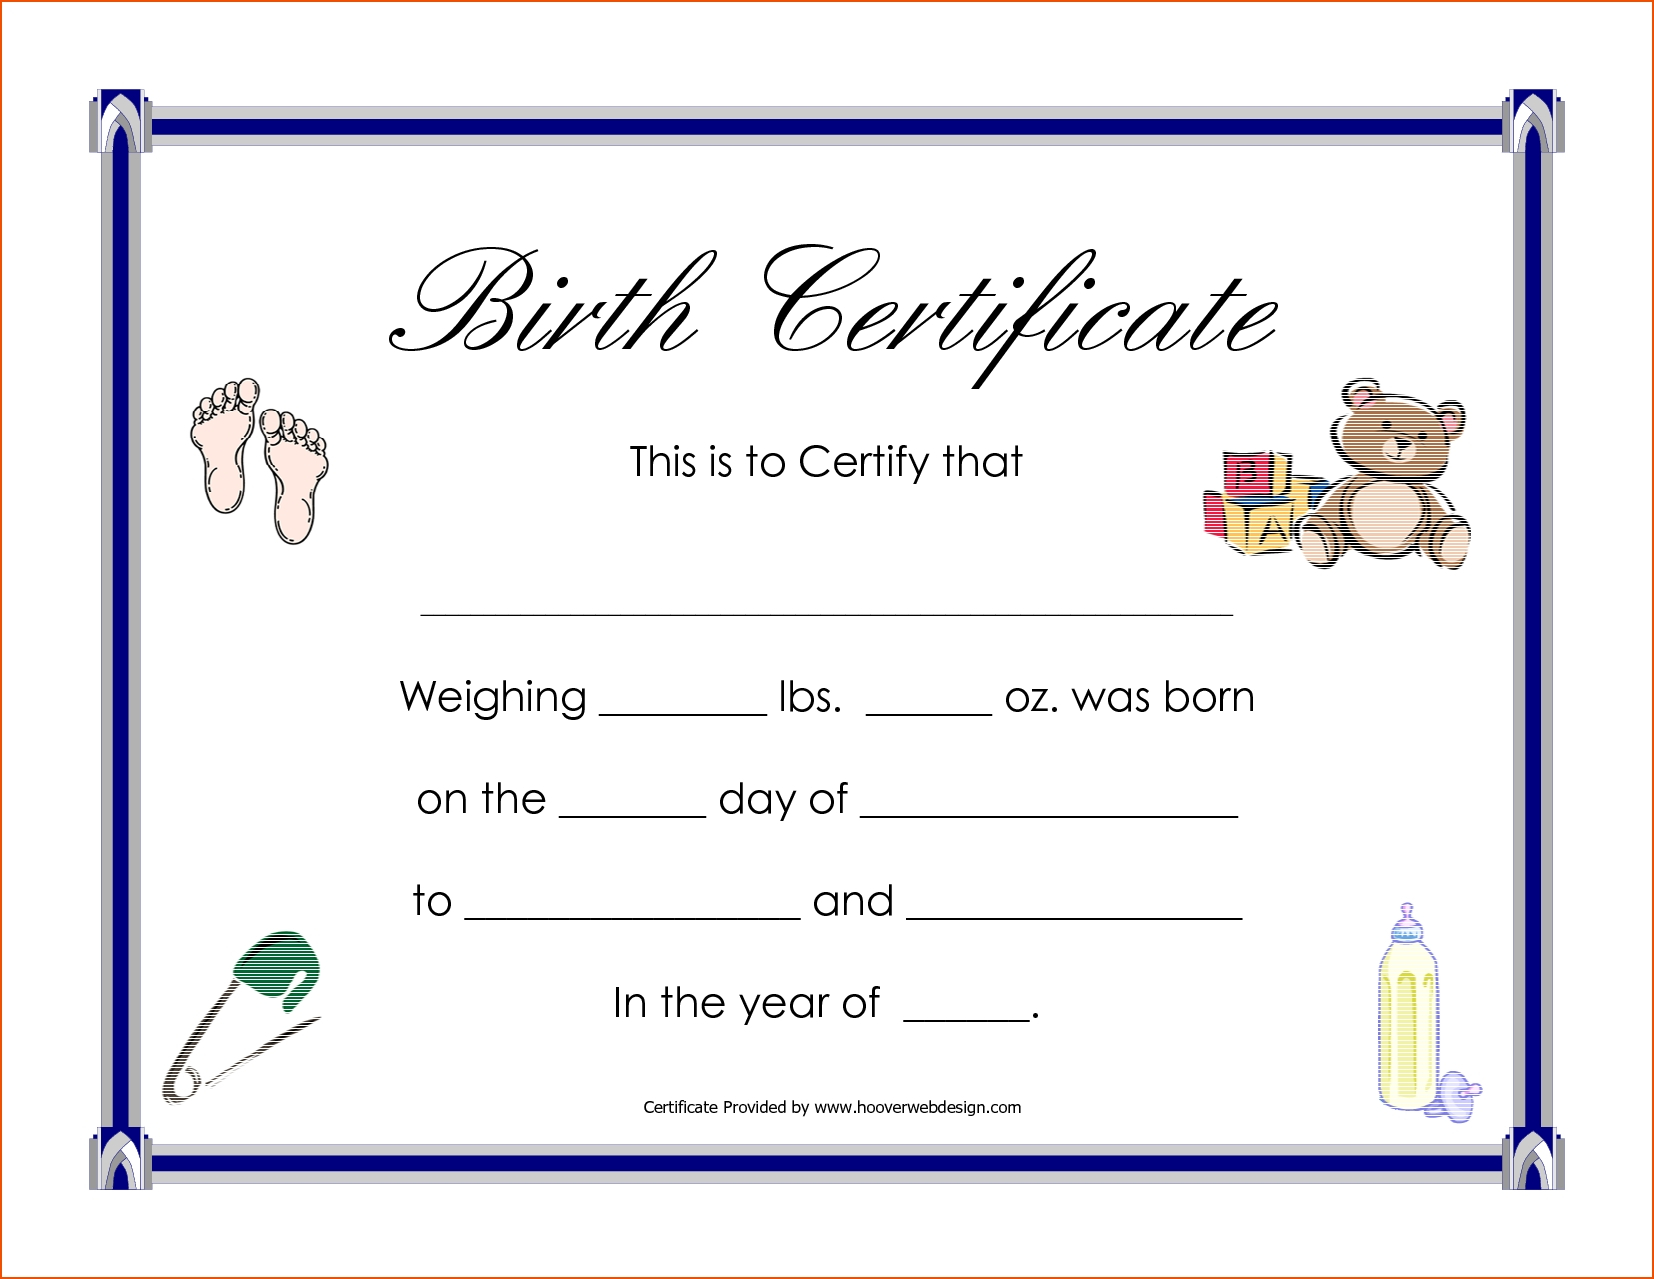 A Birth Certificate Template | Safebest.xyz Throughout Birth Certificate Templates For Word